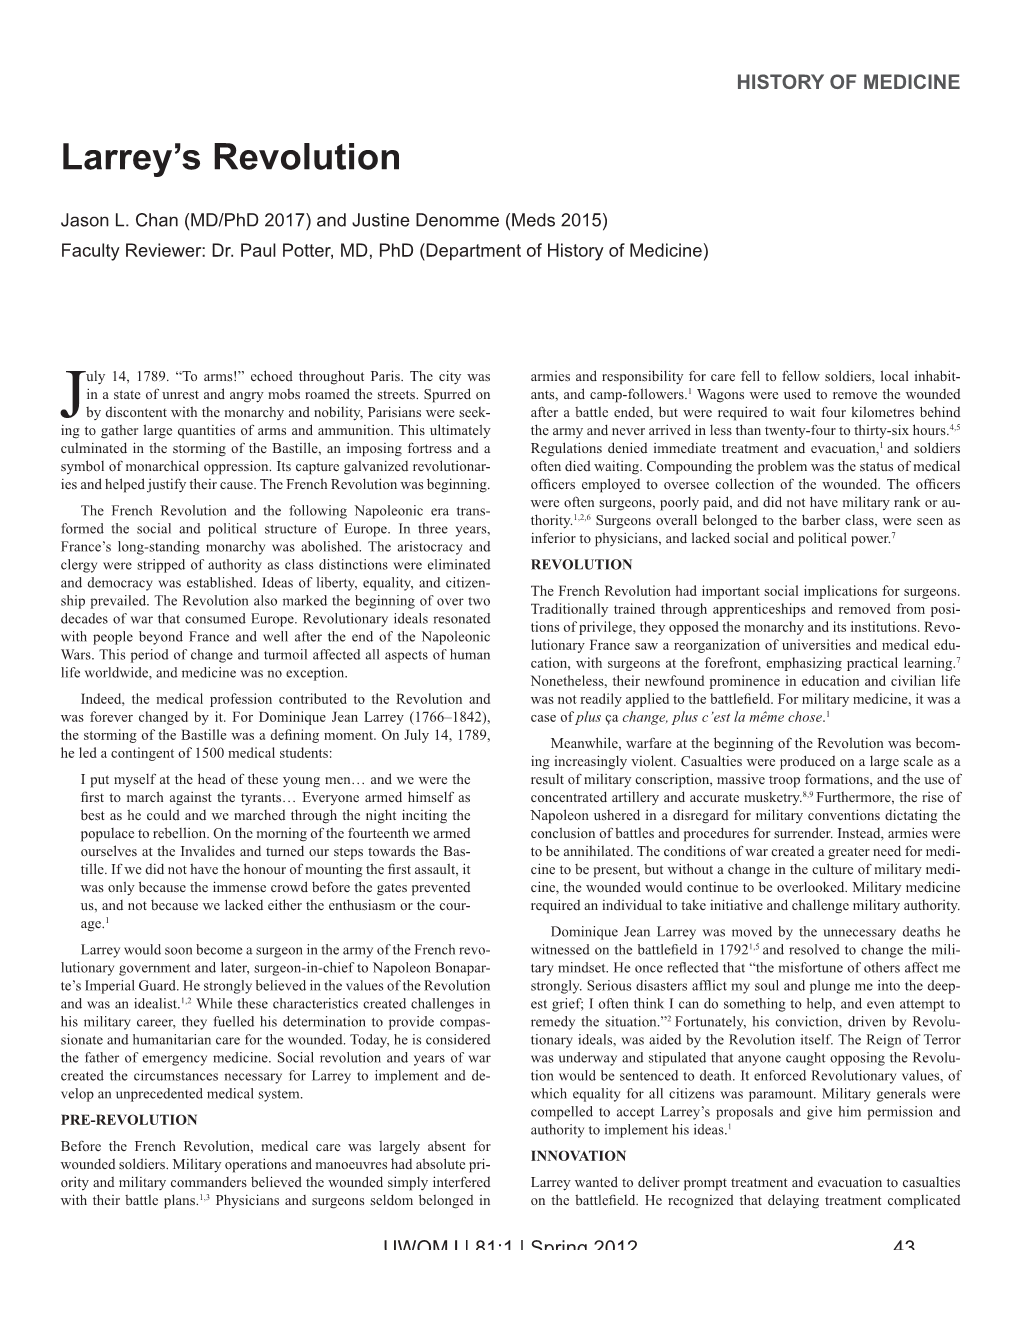 Larrey's Revolution